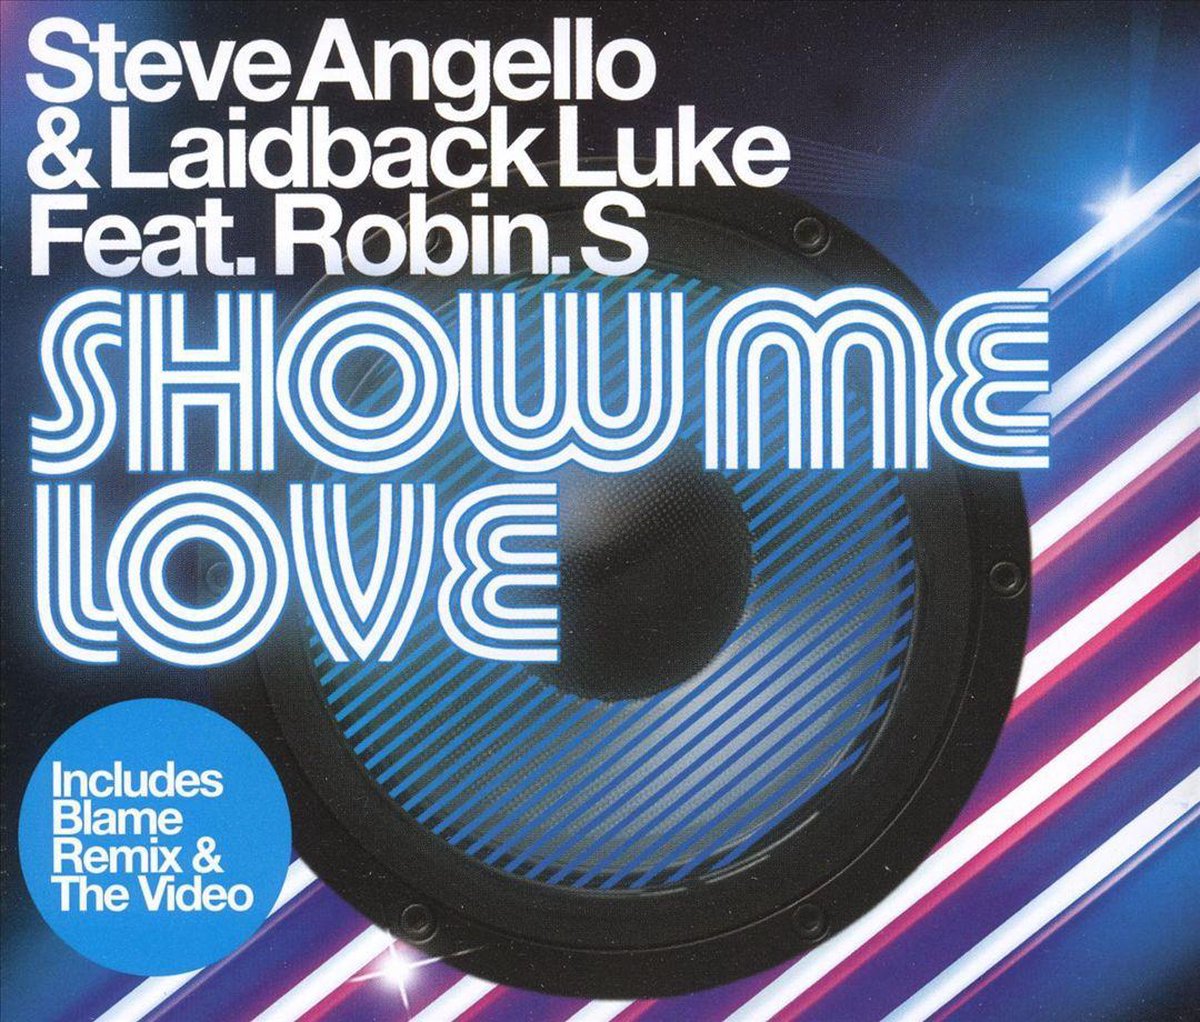 Show Me Love - Steve Angello